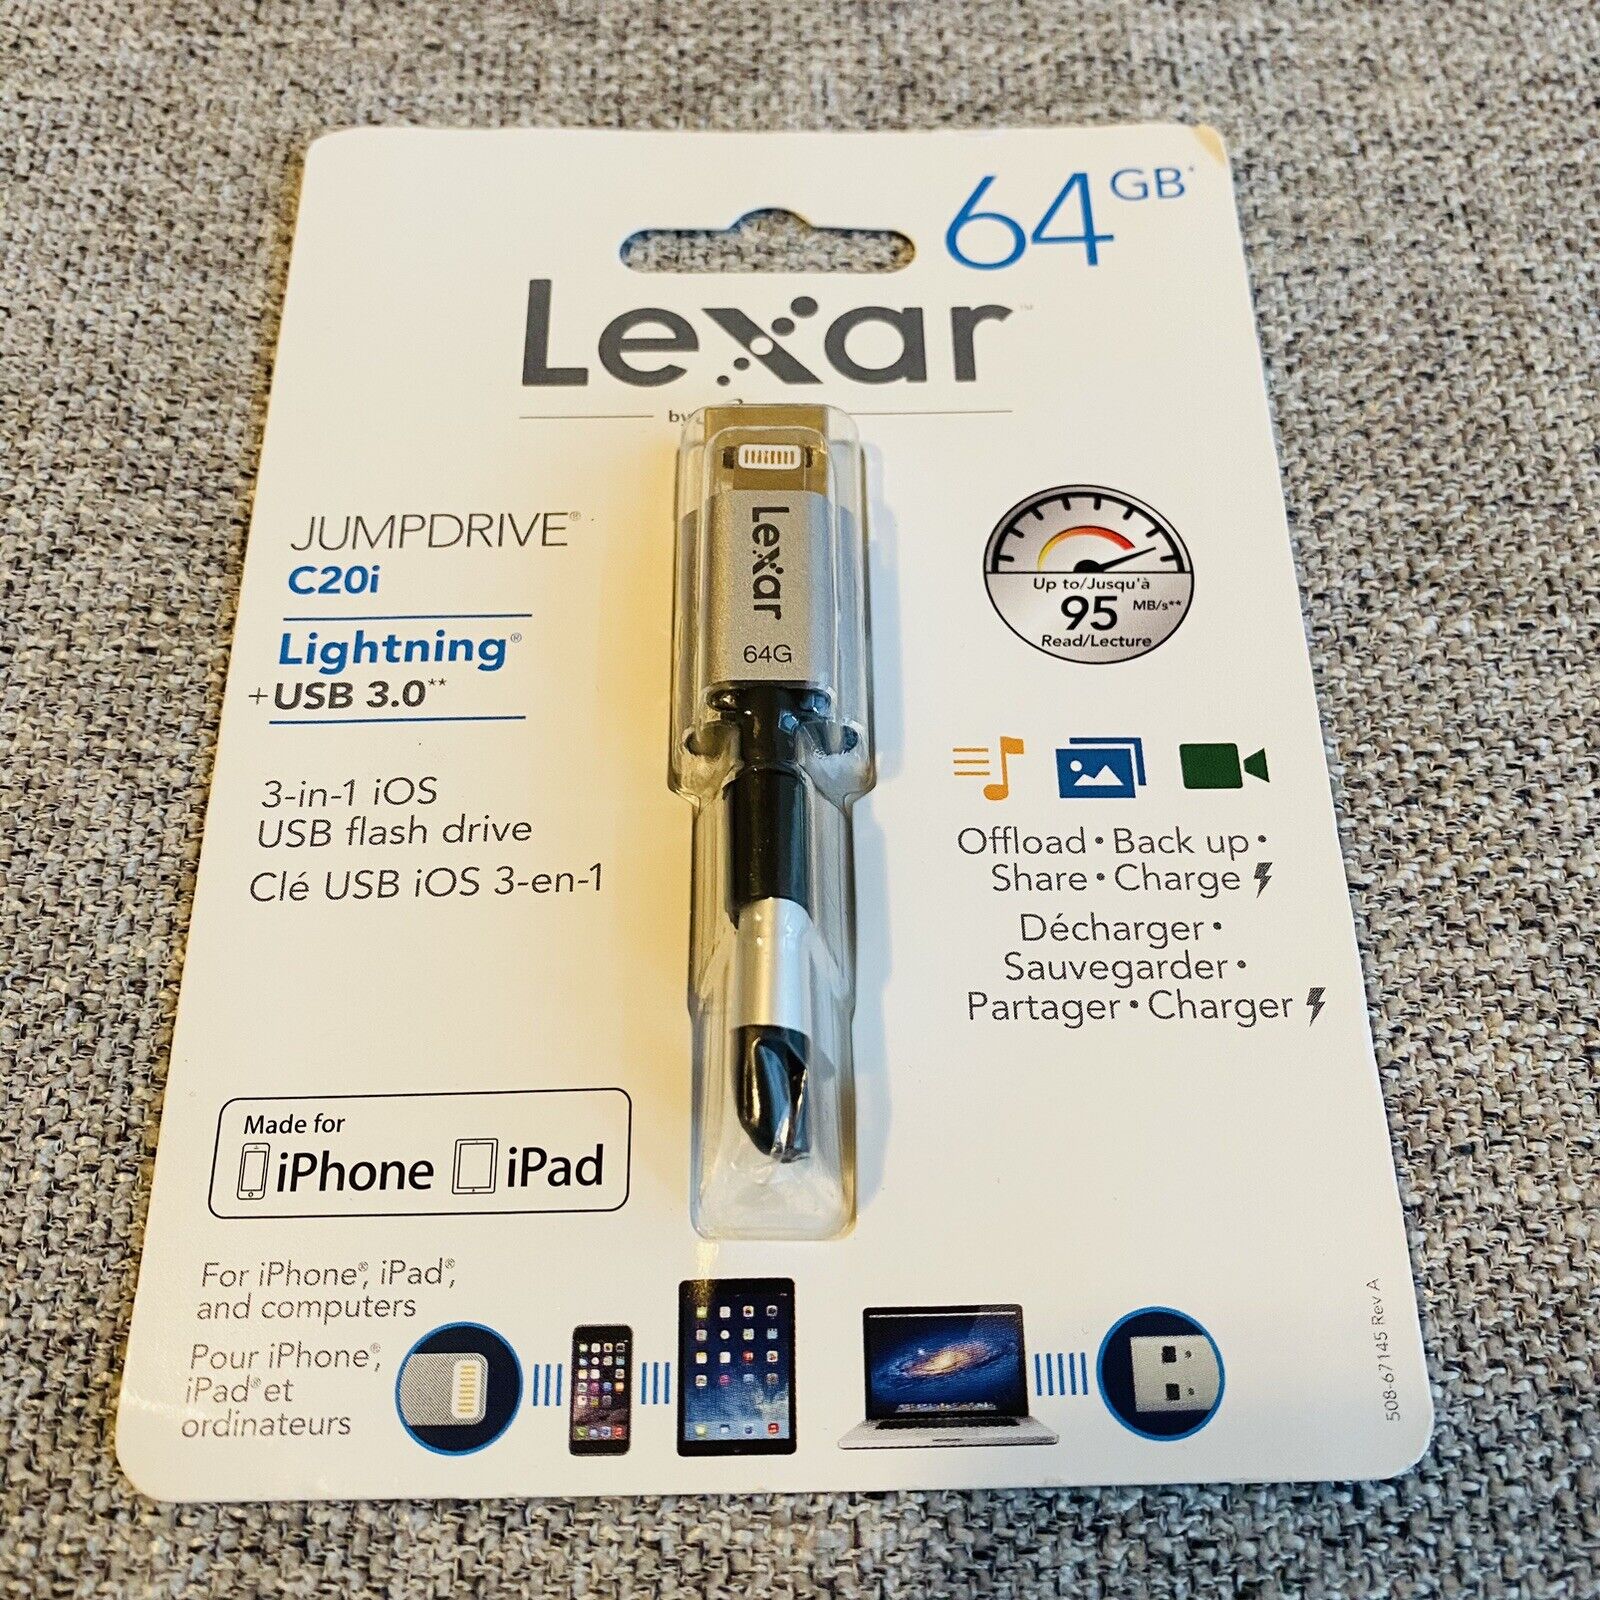 New Sealed Lexar 64GB Jumpdrive C20i Lightning USB 3.0 * Share Offload Charge 